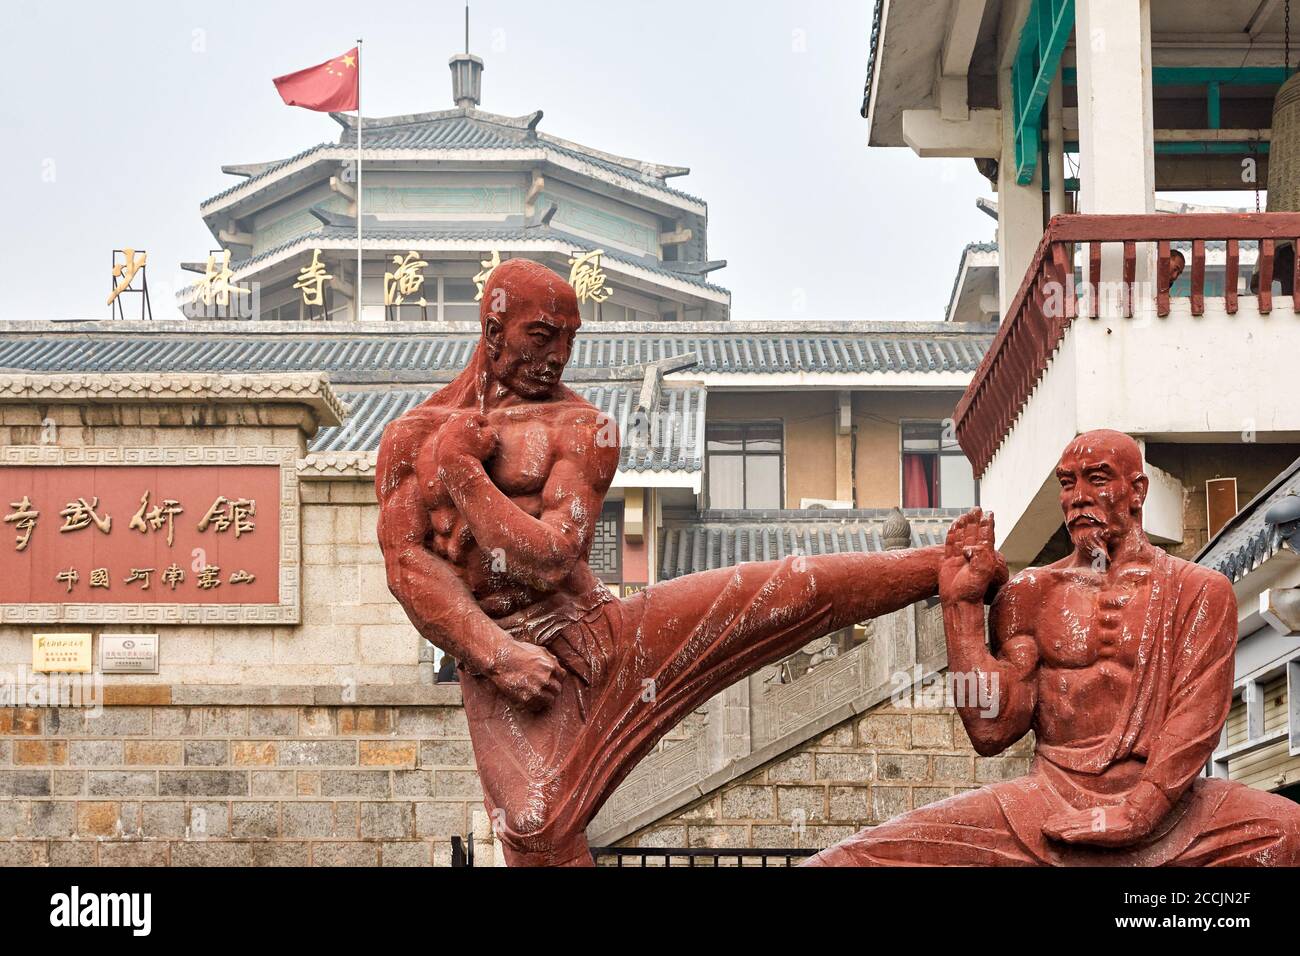 Shaolin, Luoyang, Henan Province / China - January 4, 2016: Famous martial arts Buddhist Shaolin Temple in Luoyang, China. Stock Photo